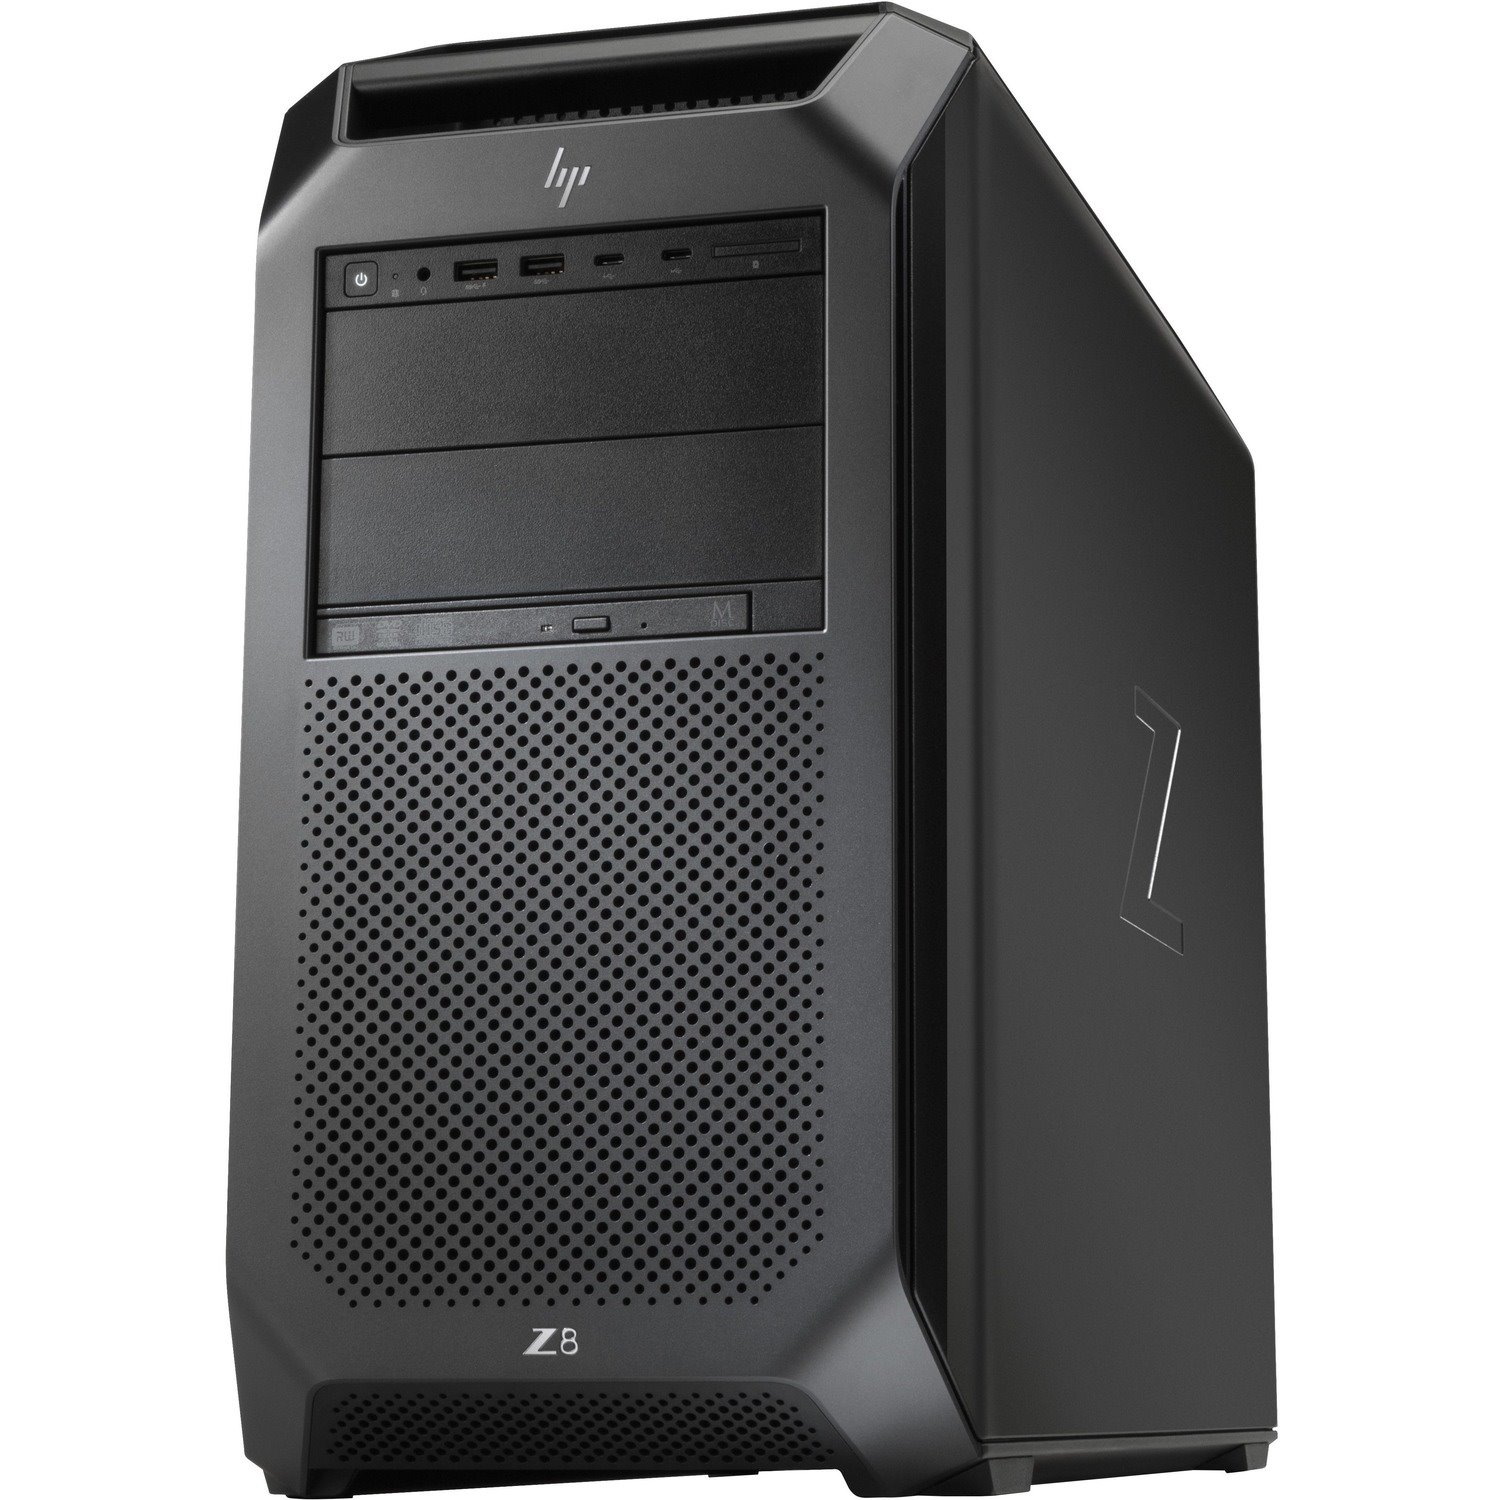 HP Z8 G4 Workstation - Intel Xeon Silver 4214 - 16 GB - 256 GB SSD - Tower - Black